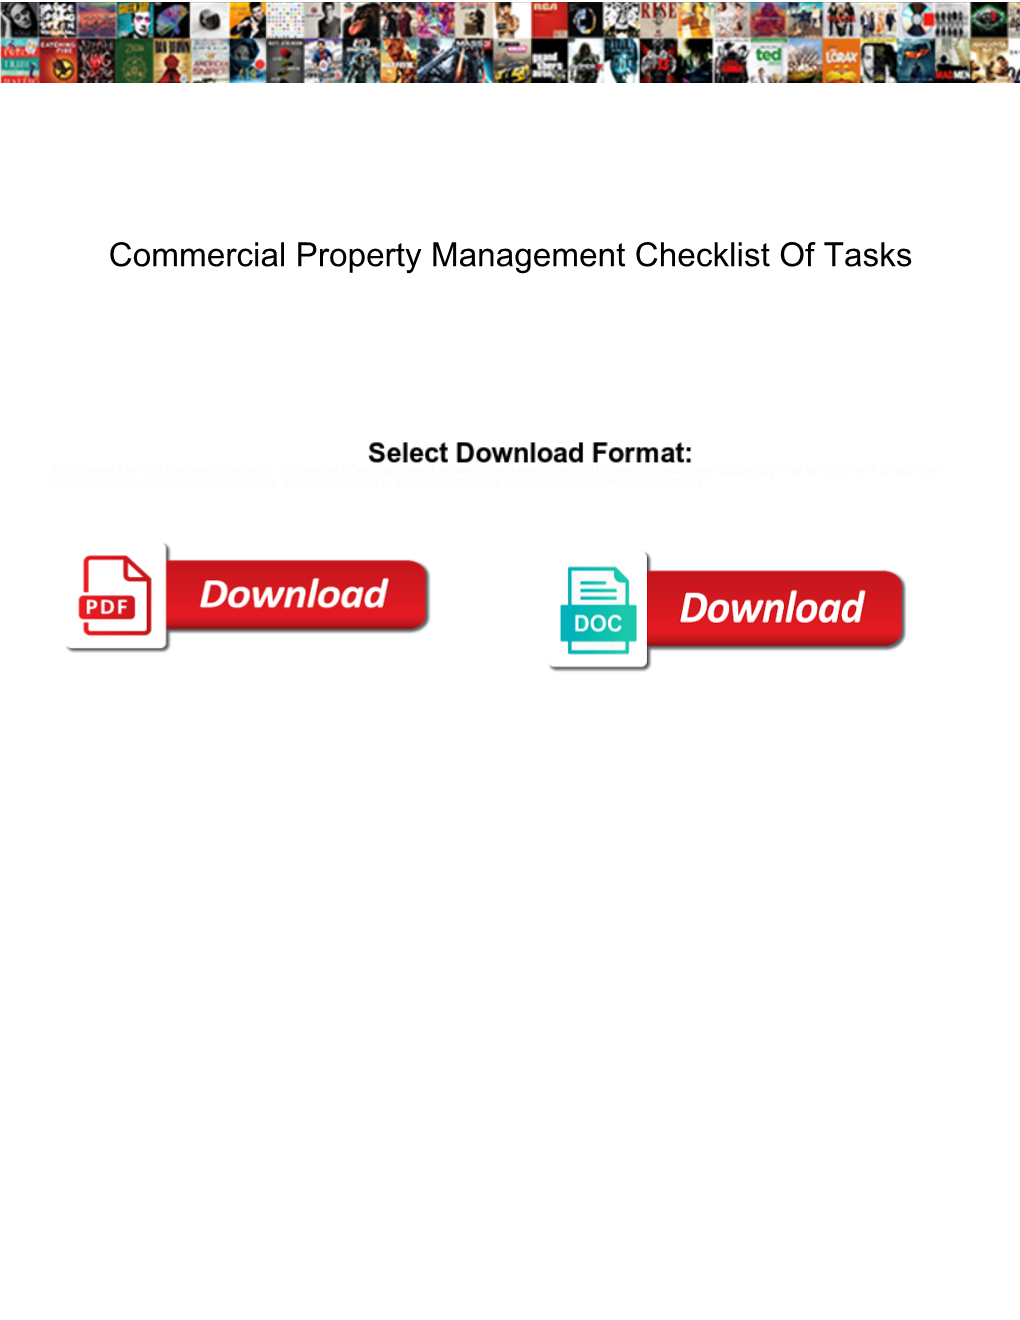 Commercial Property Management Checklist of Tasks